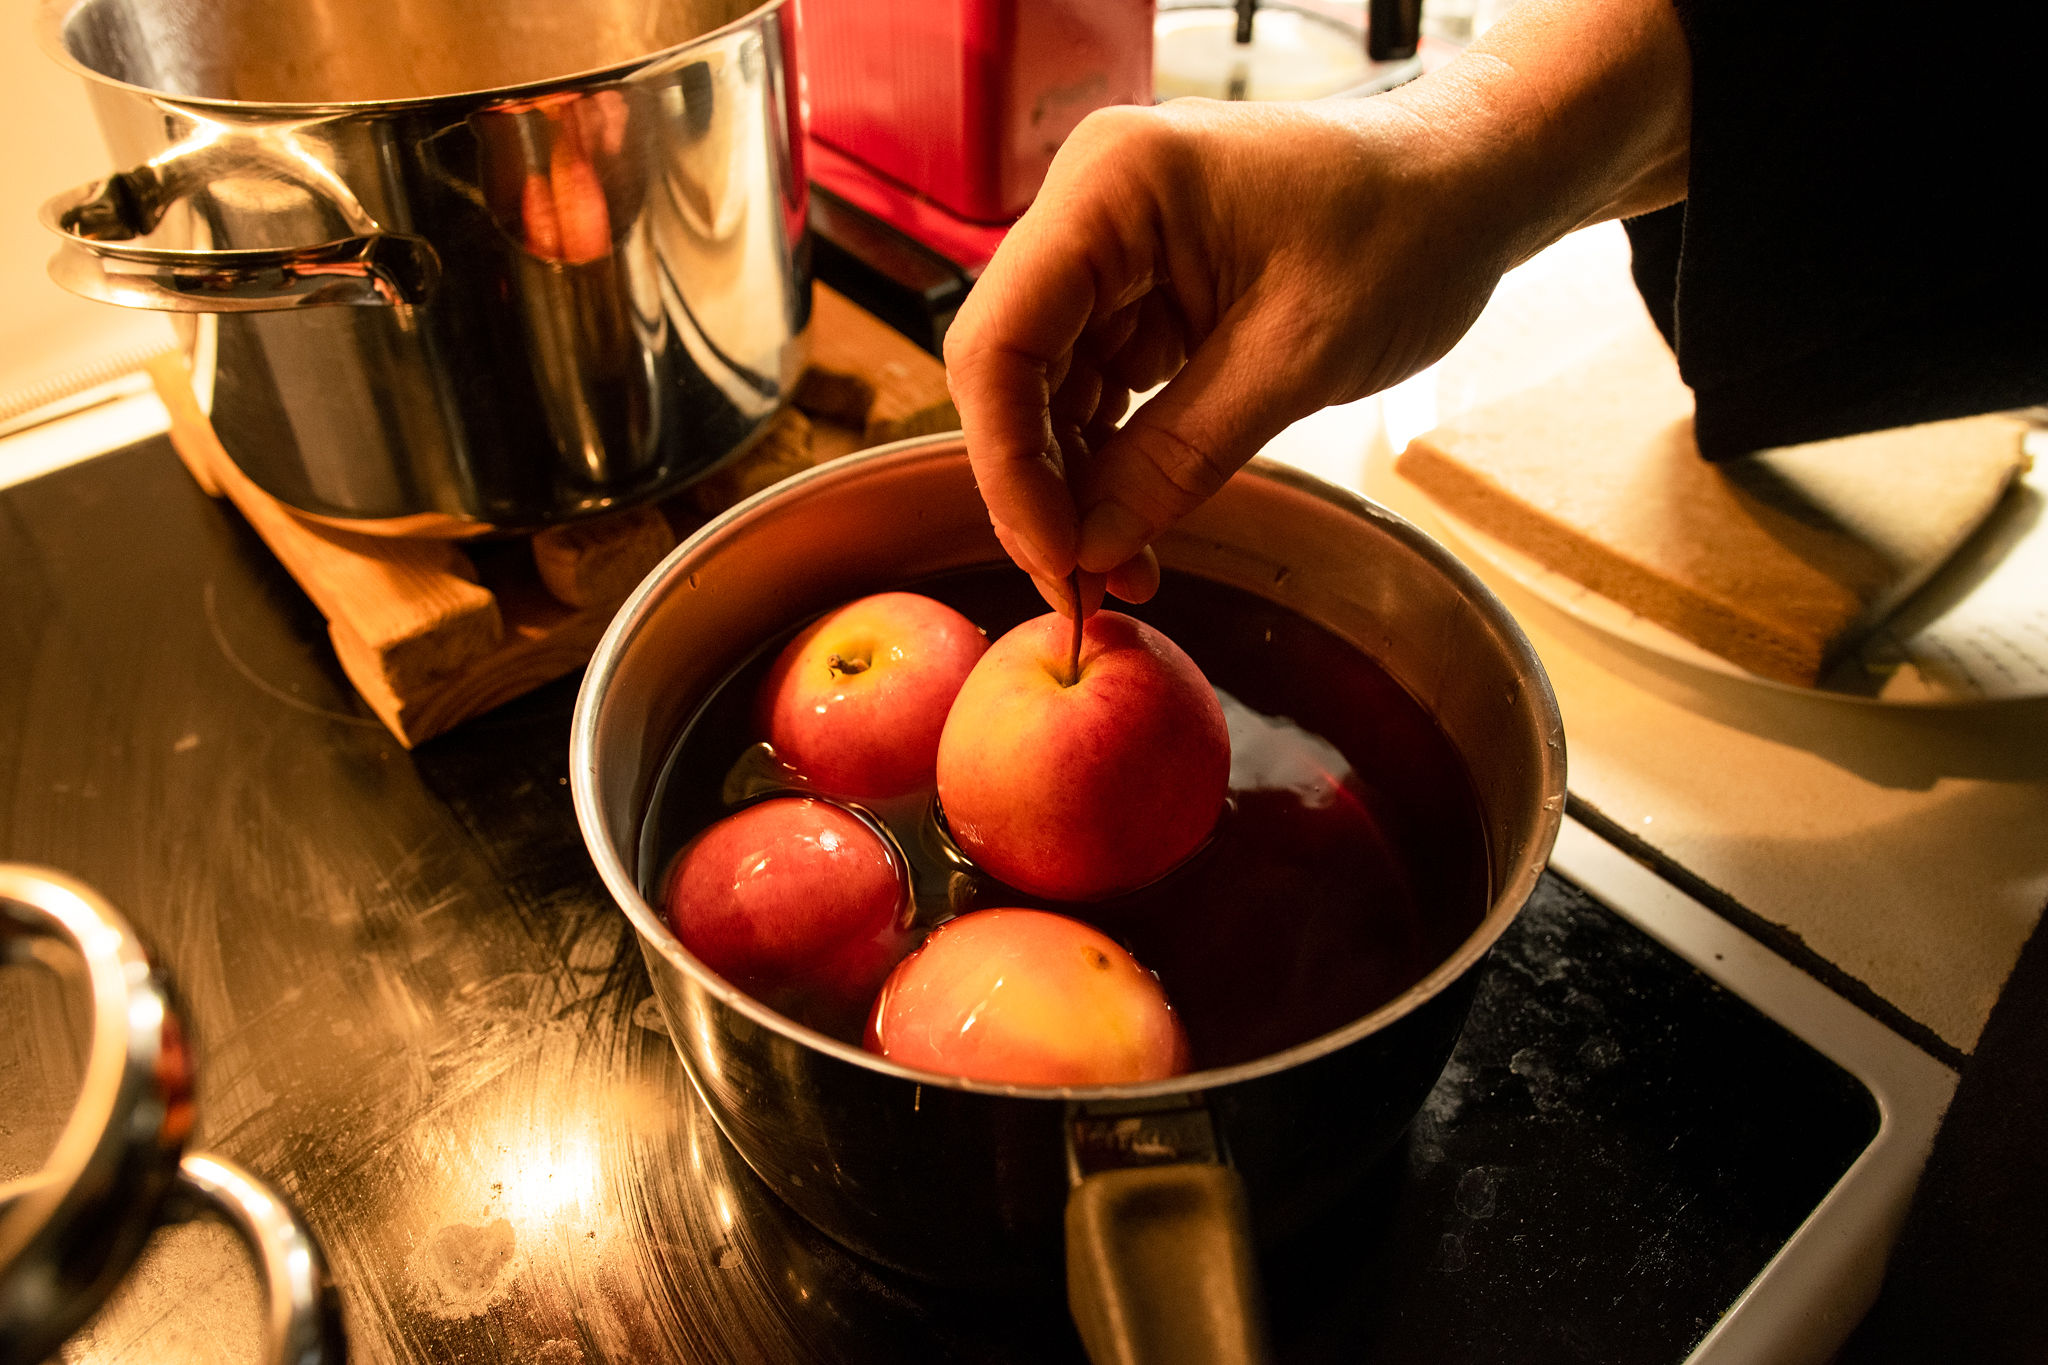 Boiling apples for simple Christmas apple dessert 